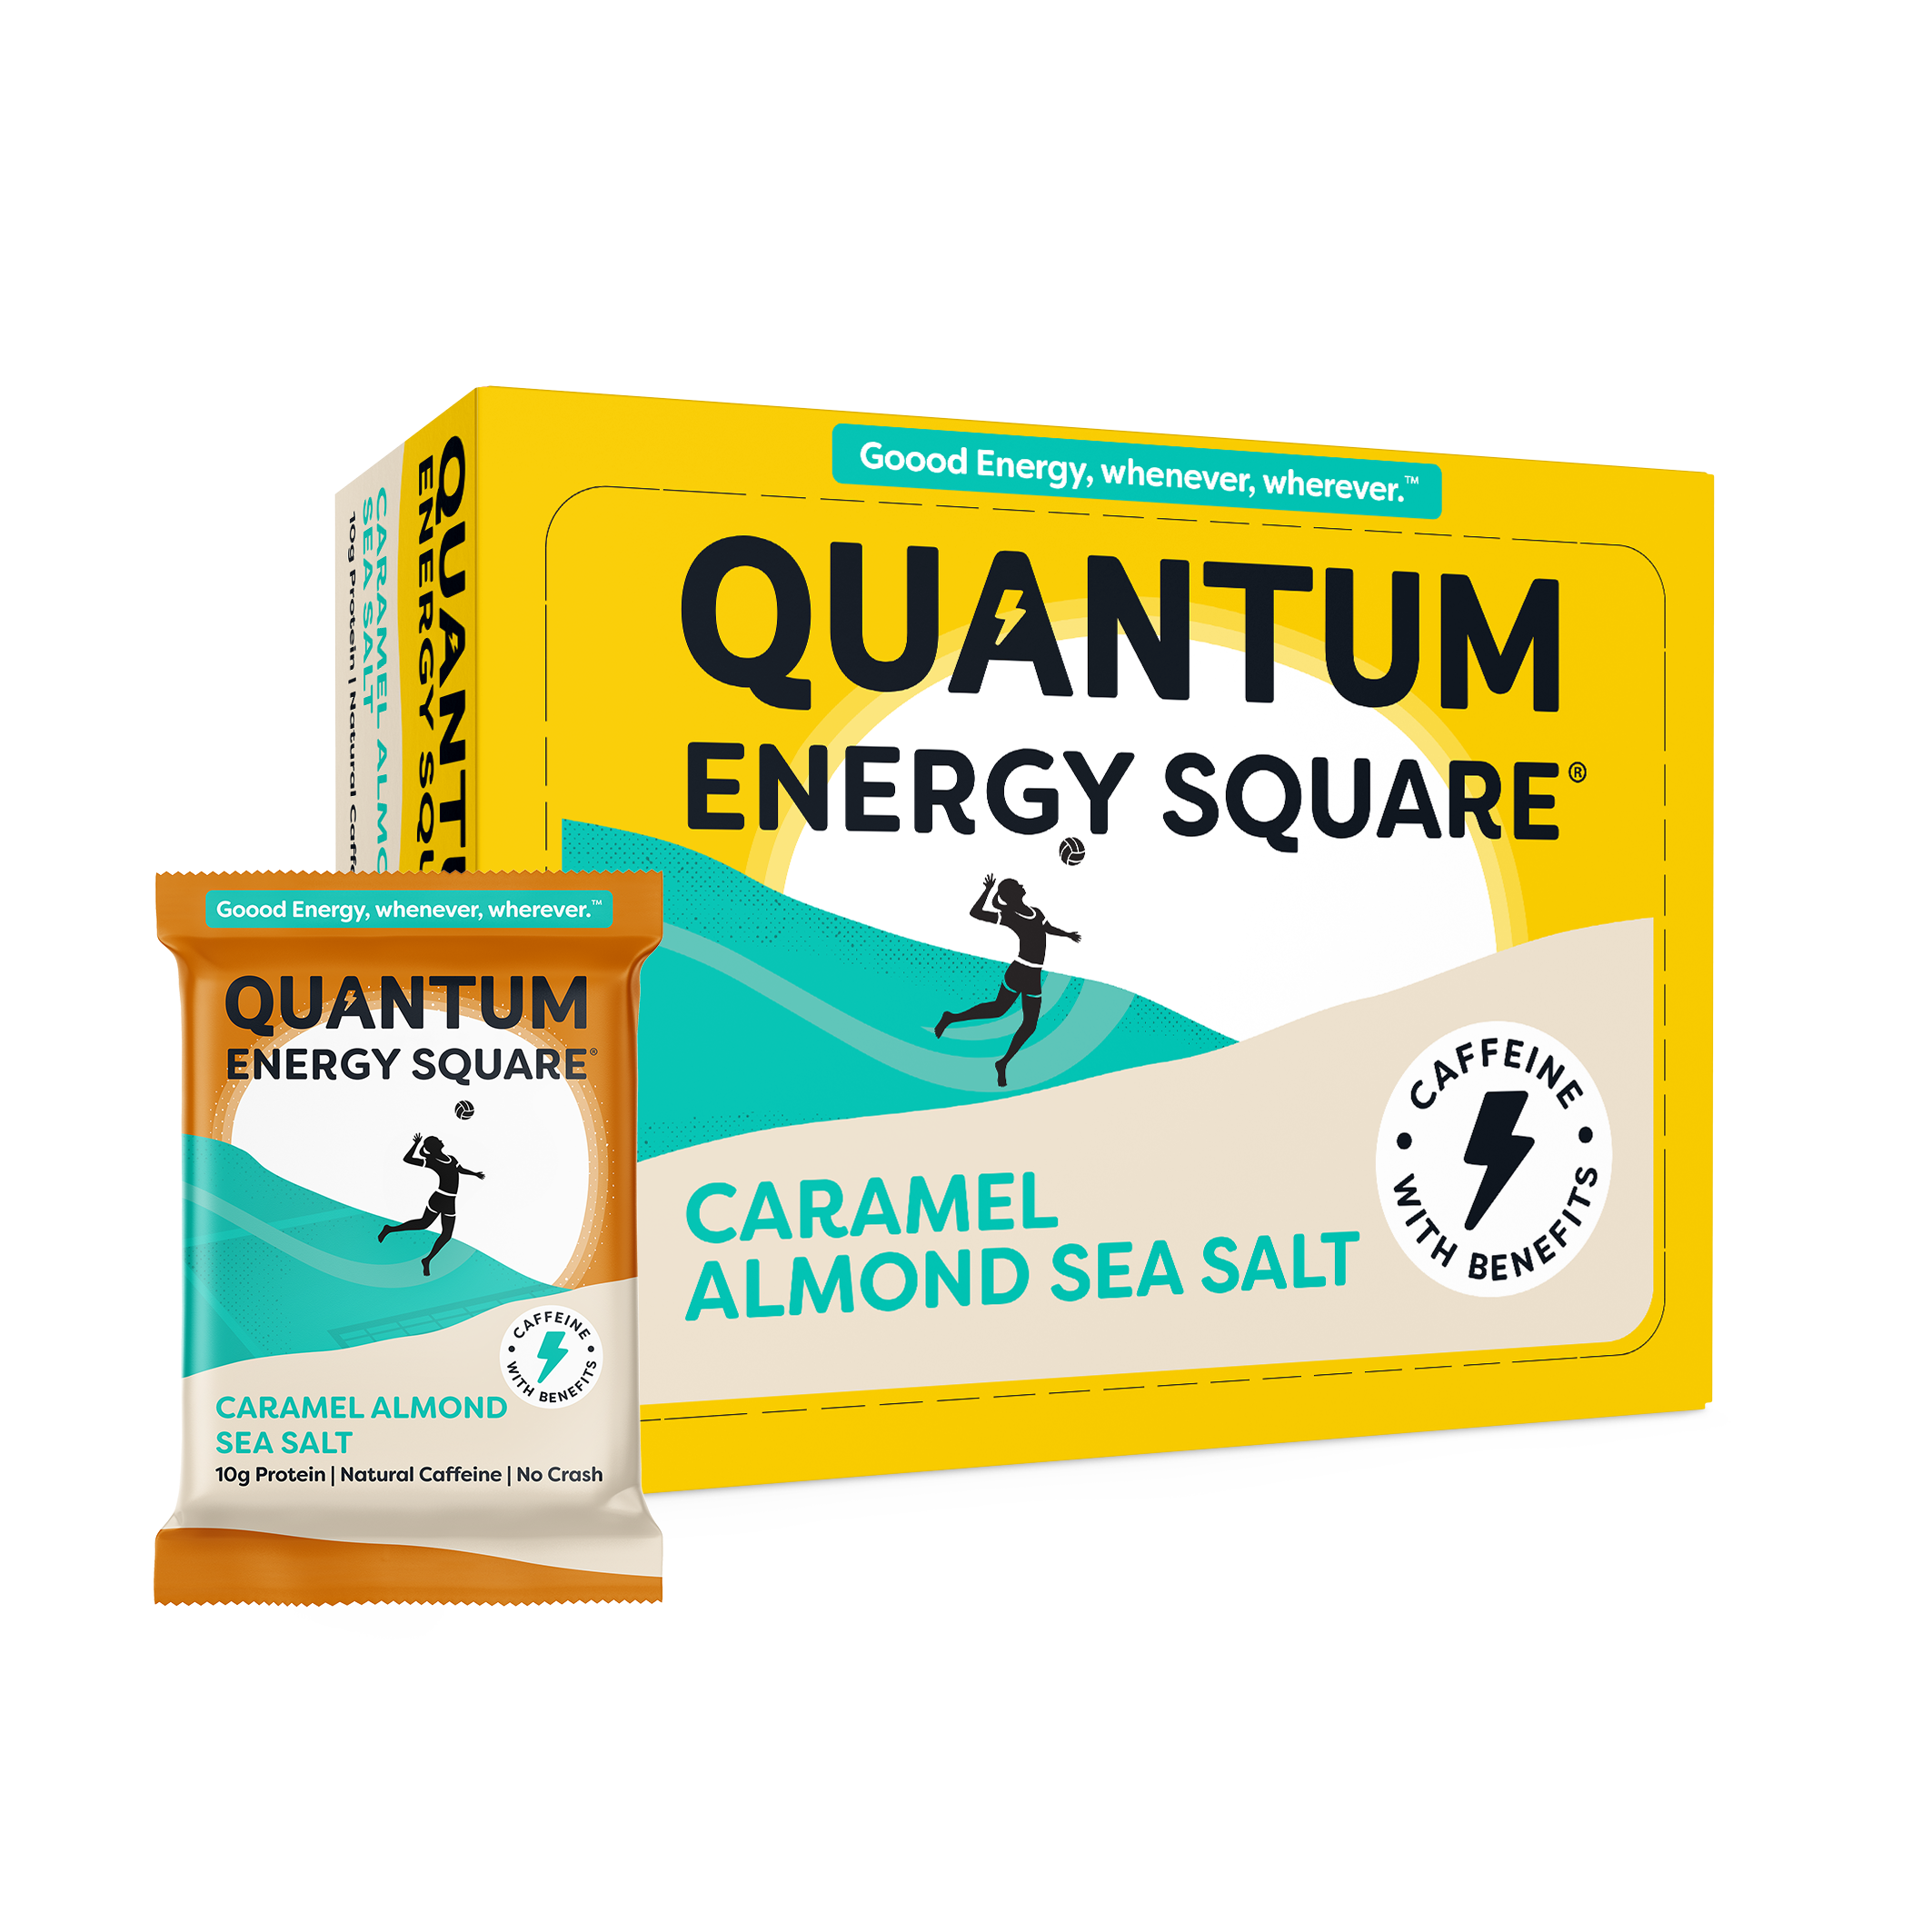 Caramel Almond Sea Salt